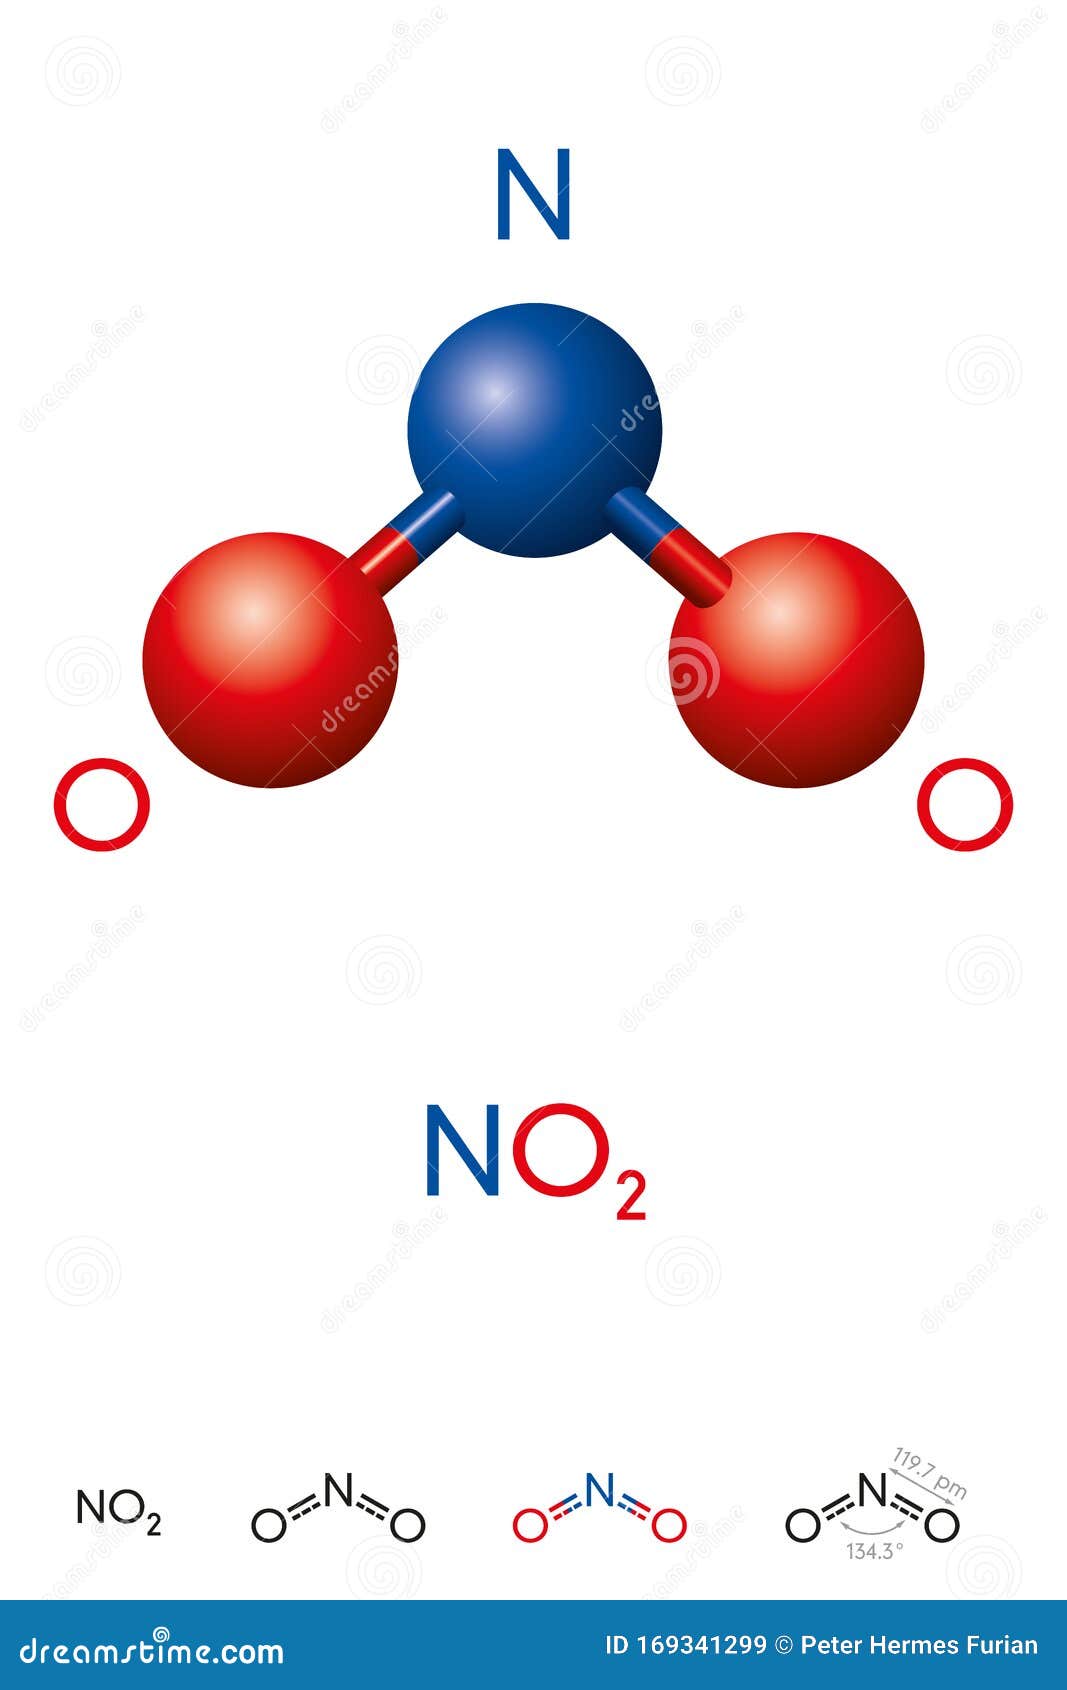 Nitrogen Dioxide, NO2, Molecule Model and Chemical Formula Stock Vector